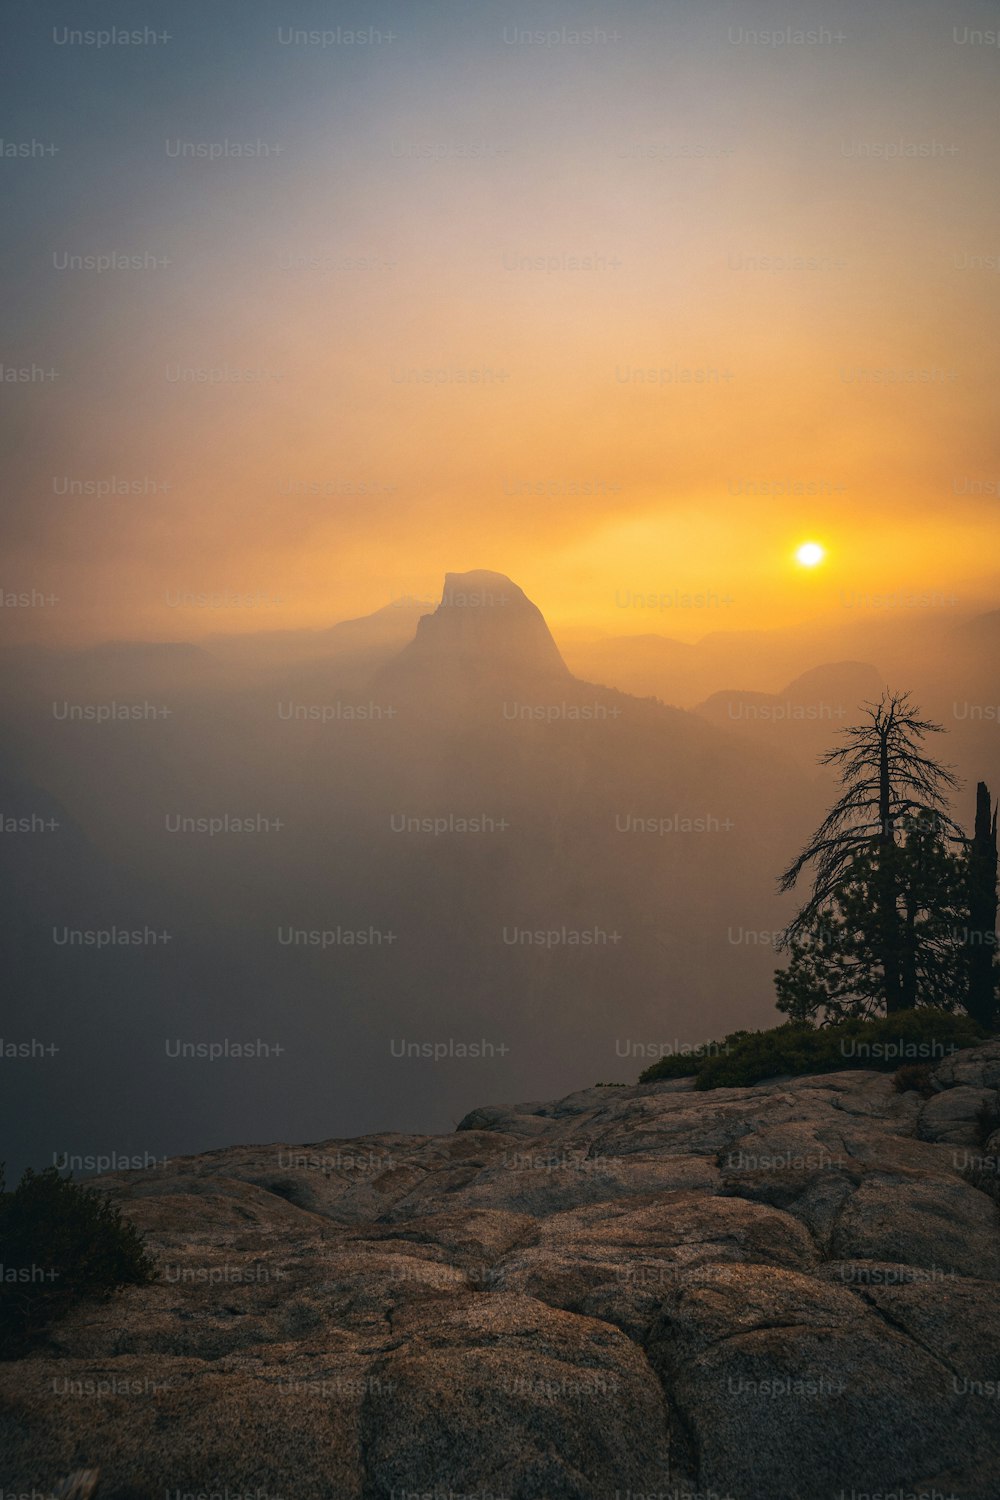 the sun is setting over a foggy mountain